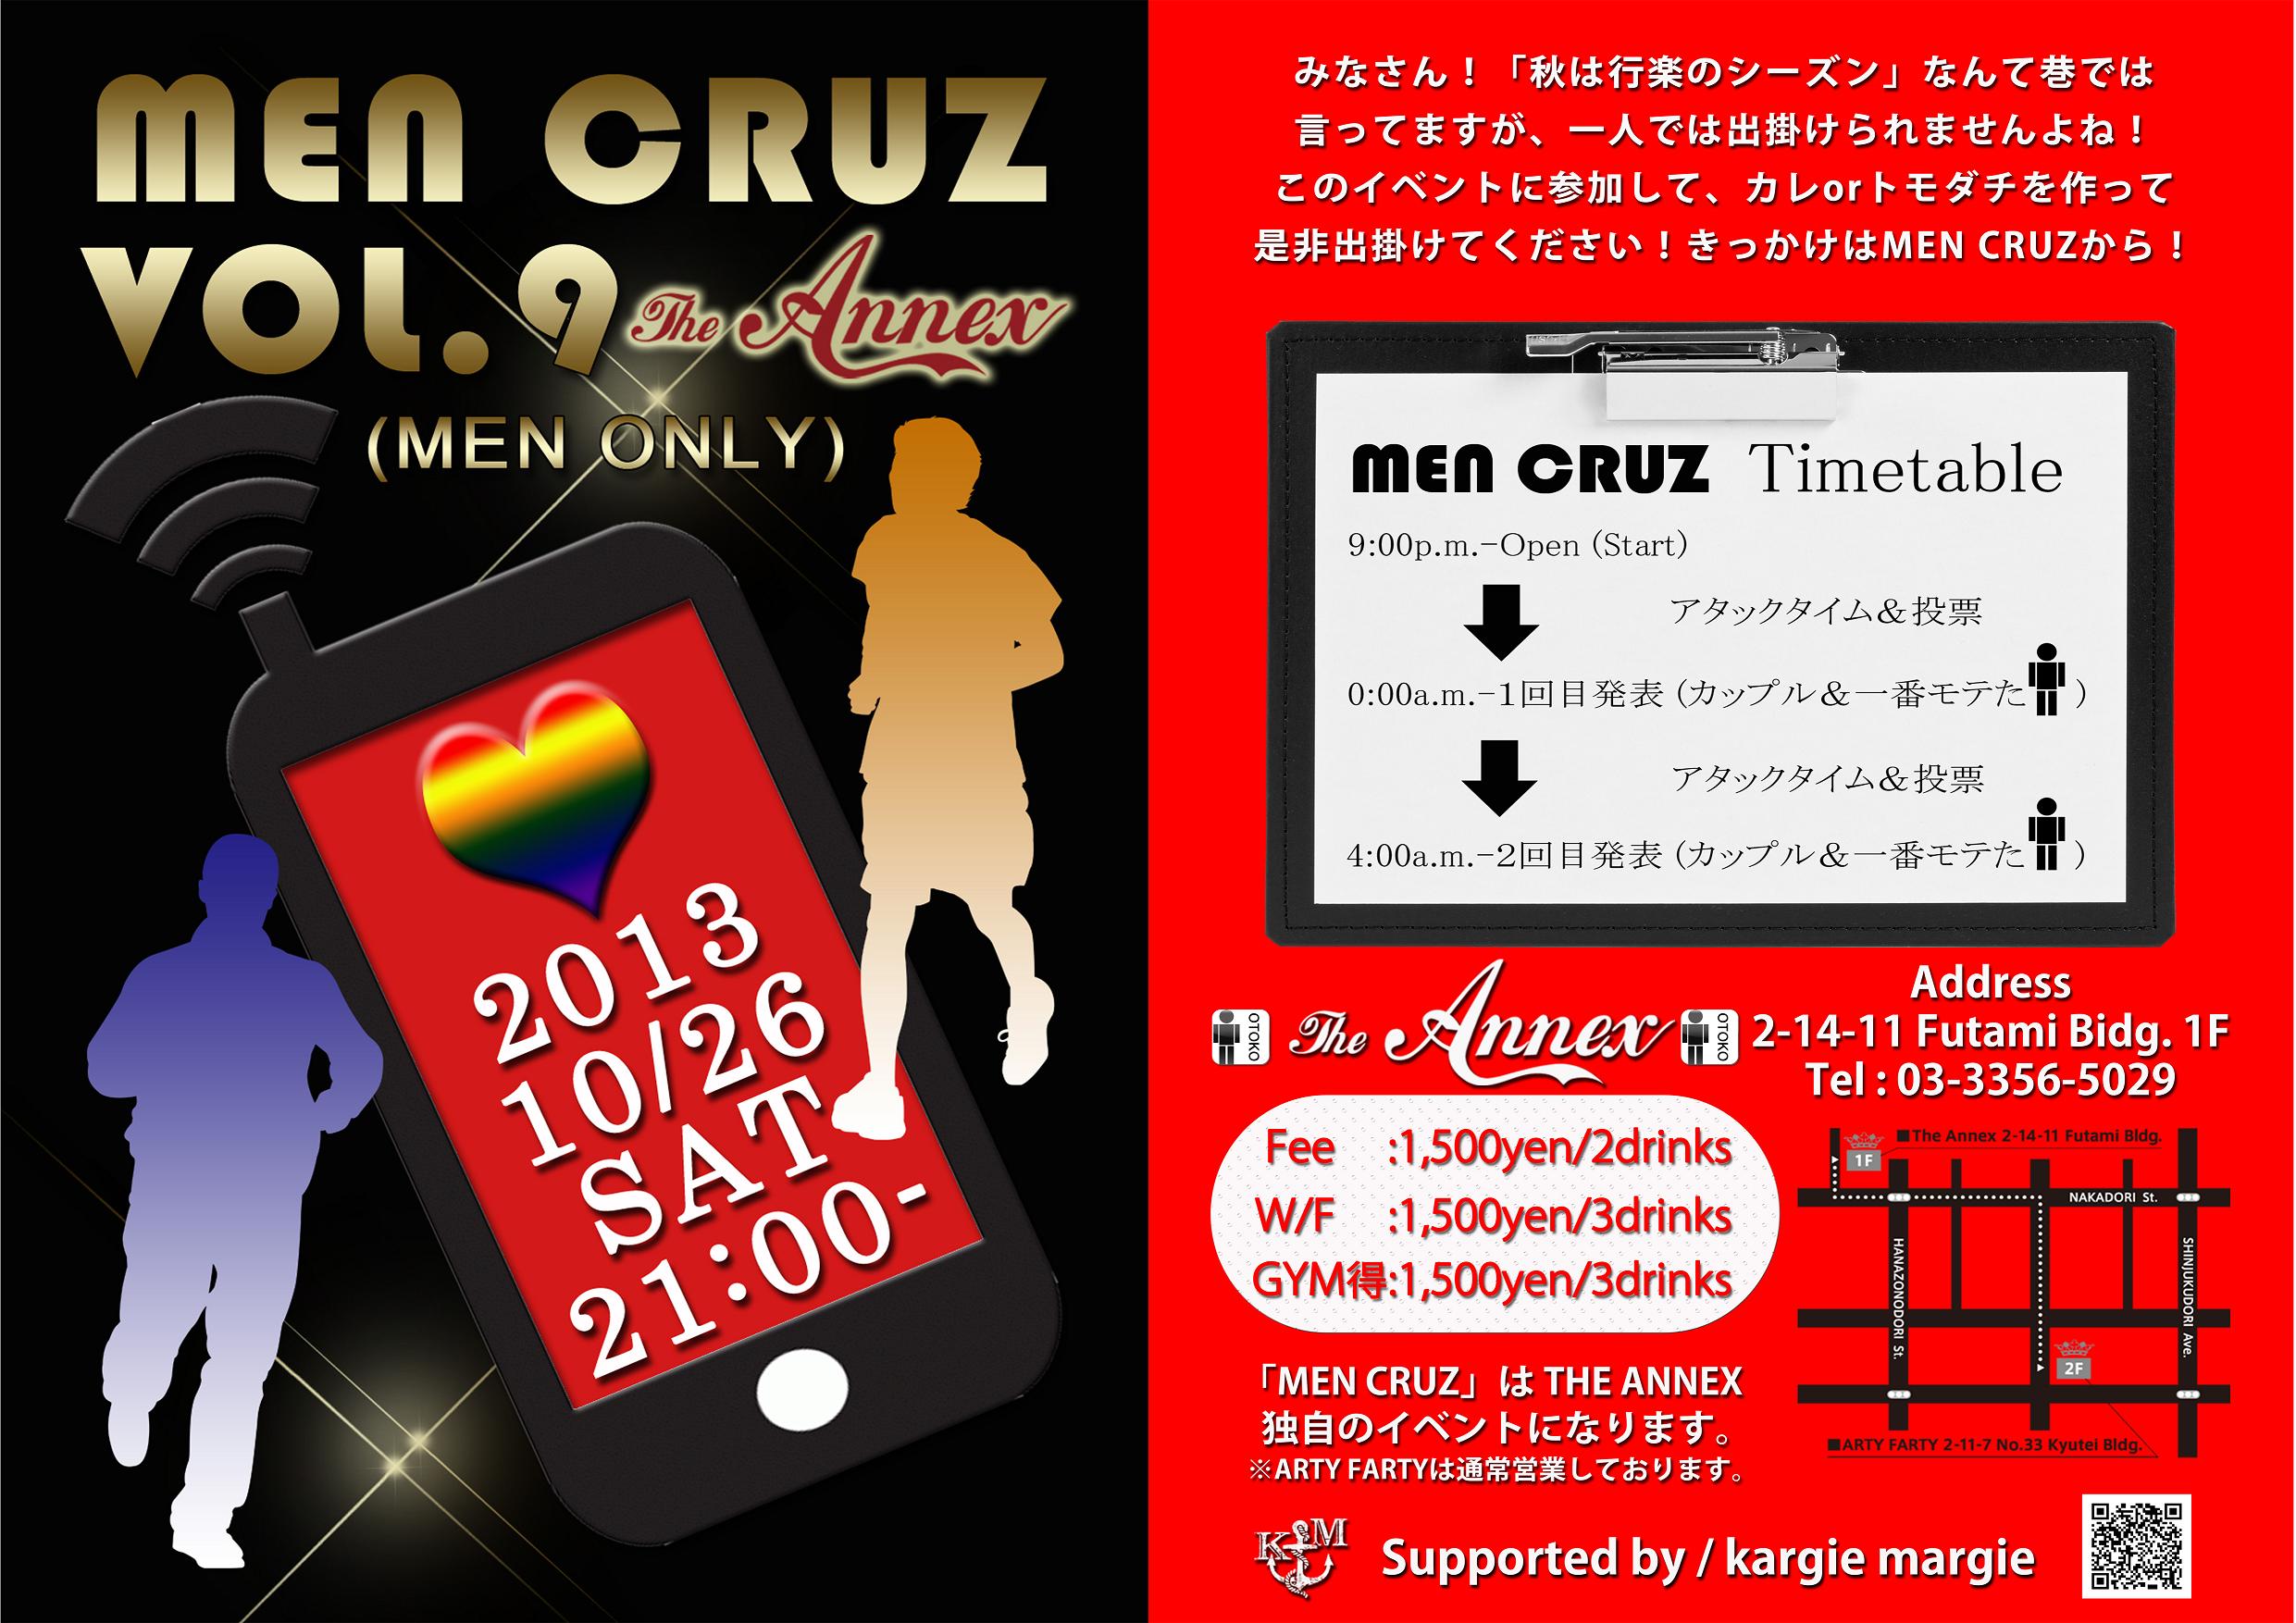 Men Cruz Vol.9 (Hunt Shot Game) (Men Only)  - 2481x1754 485.6kb